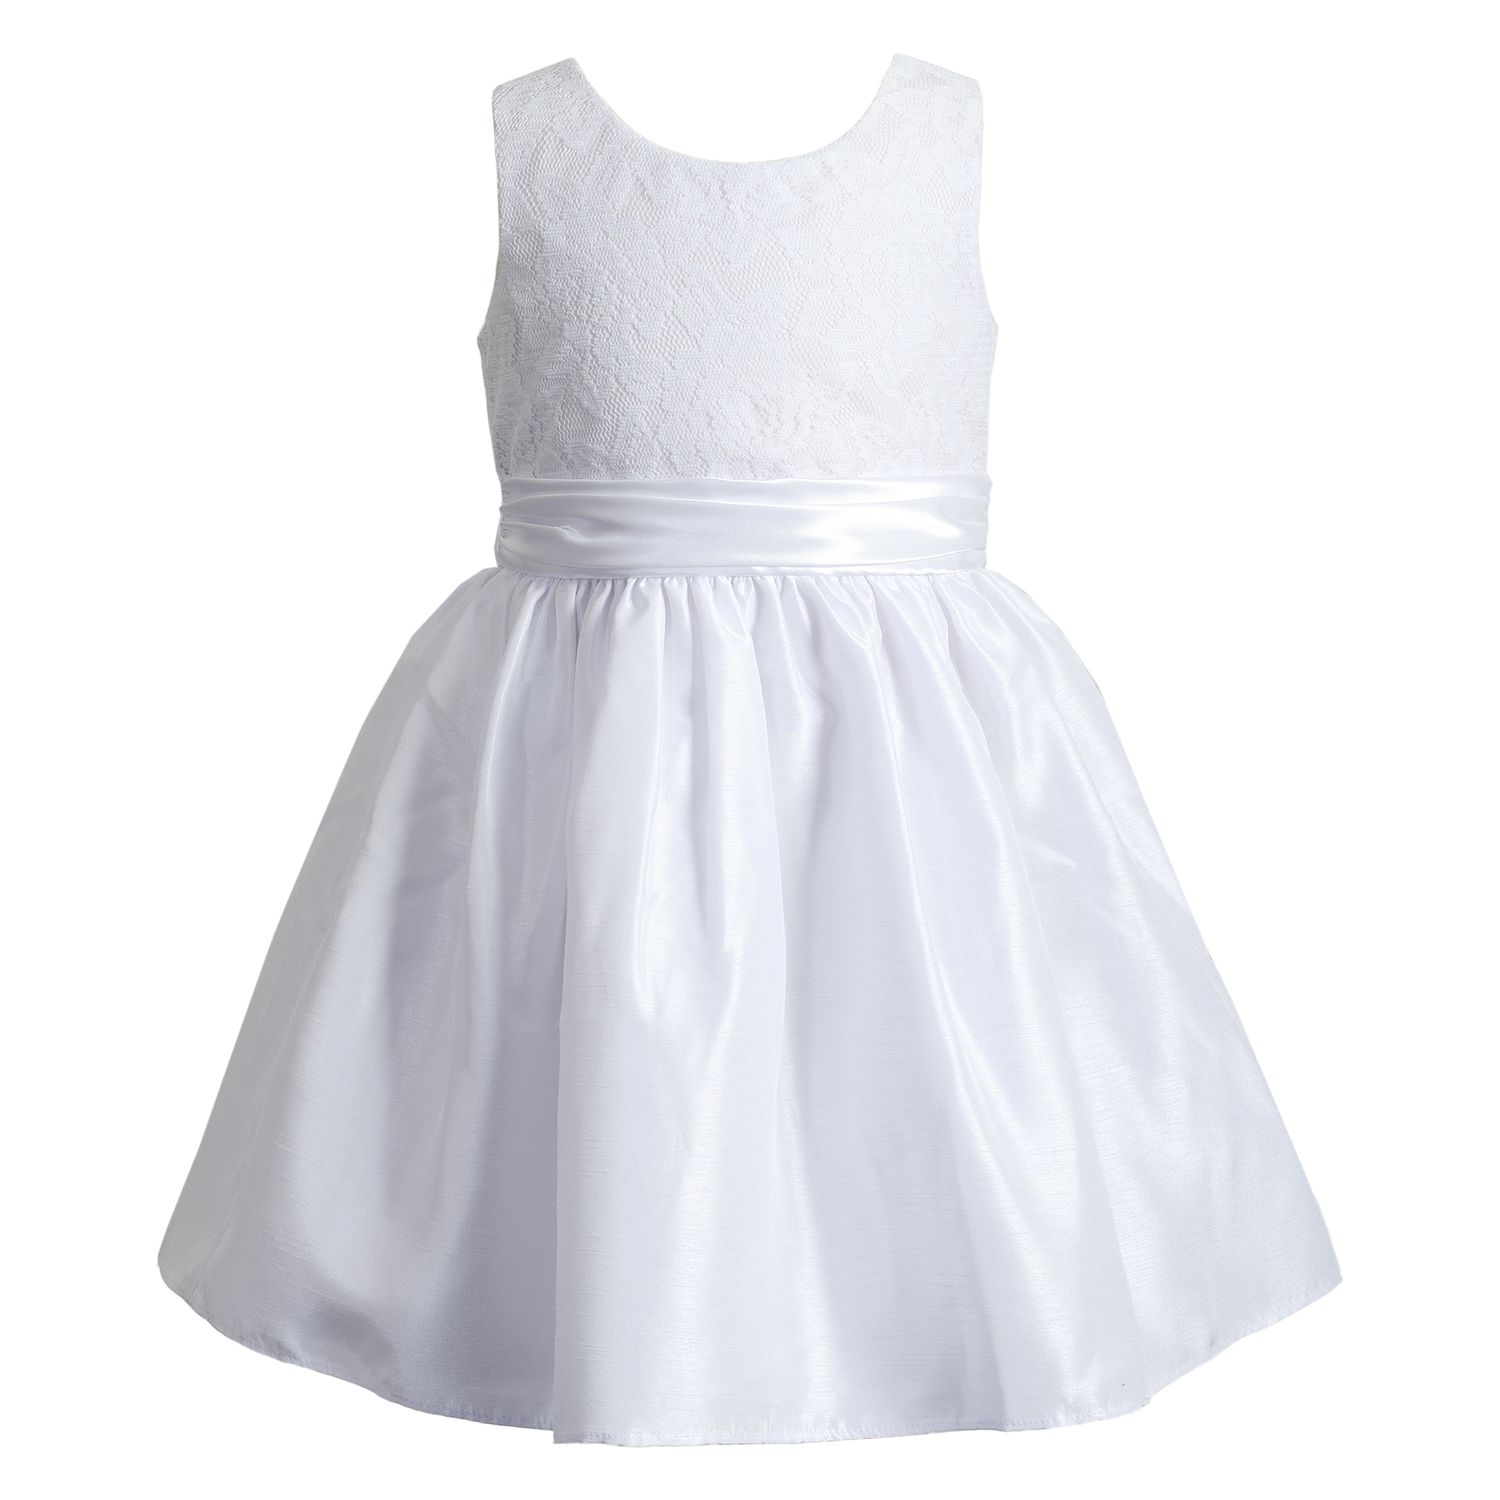 girls size 8 white dress